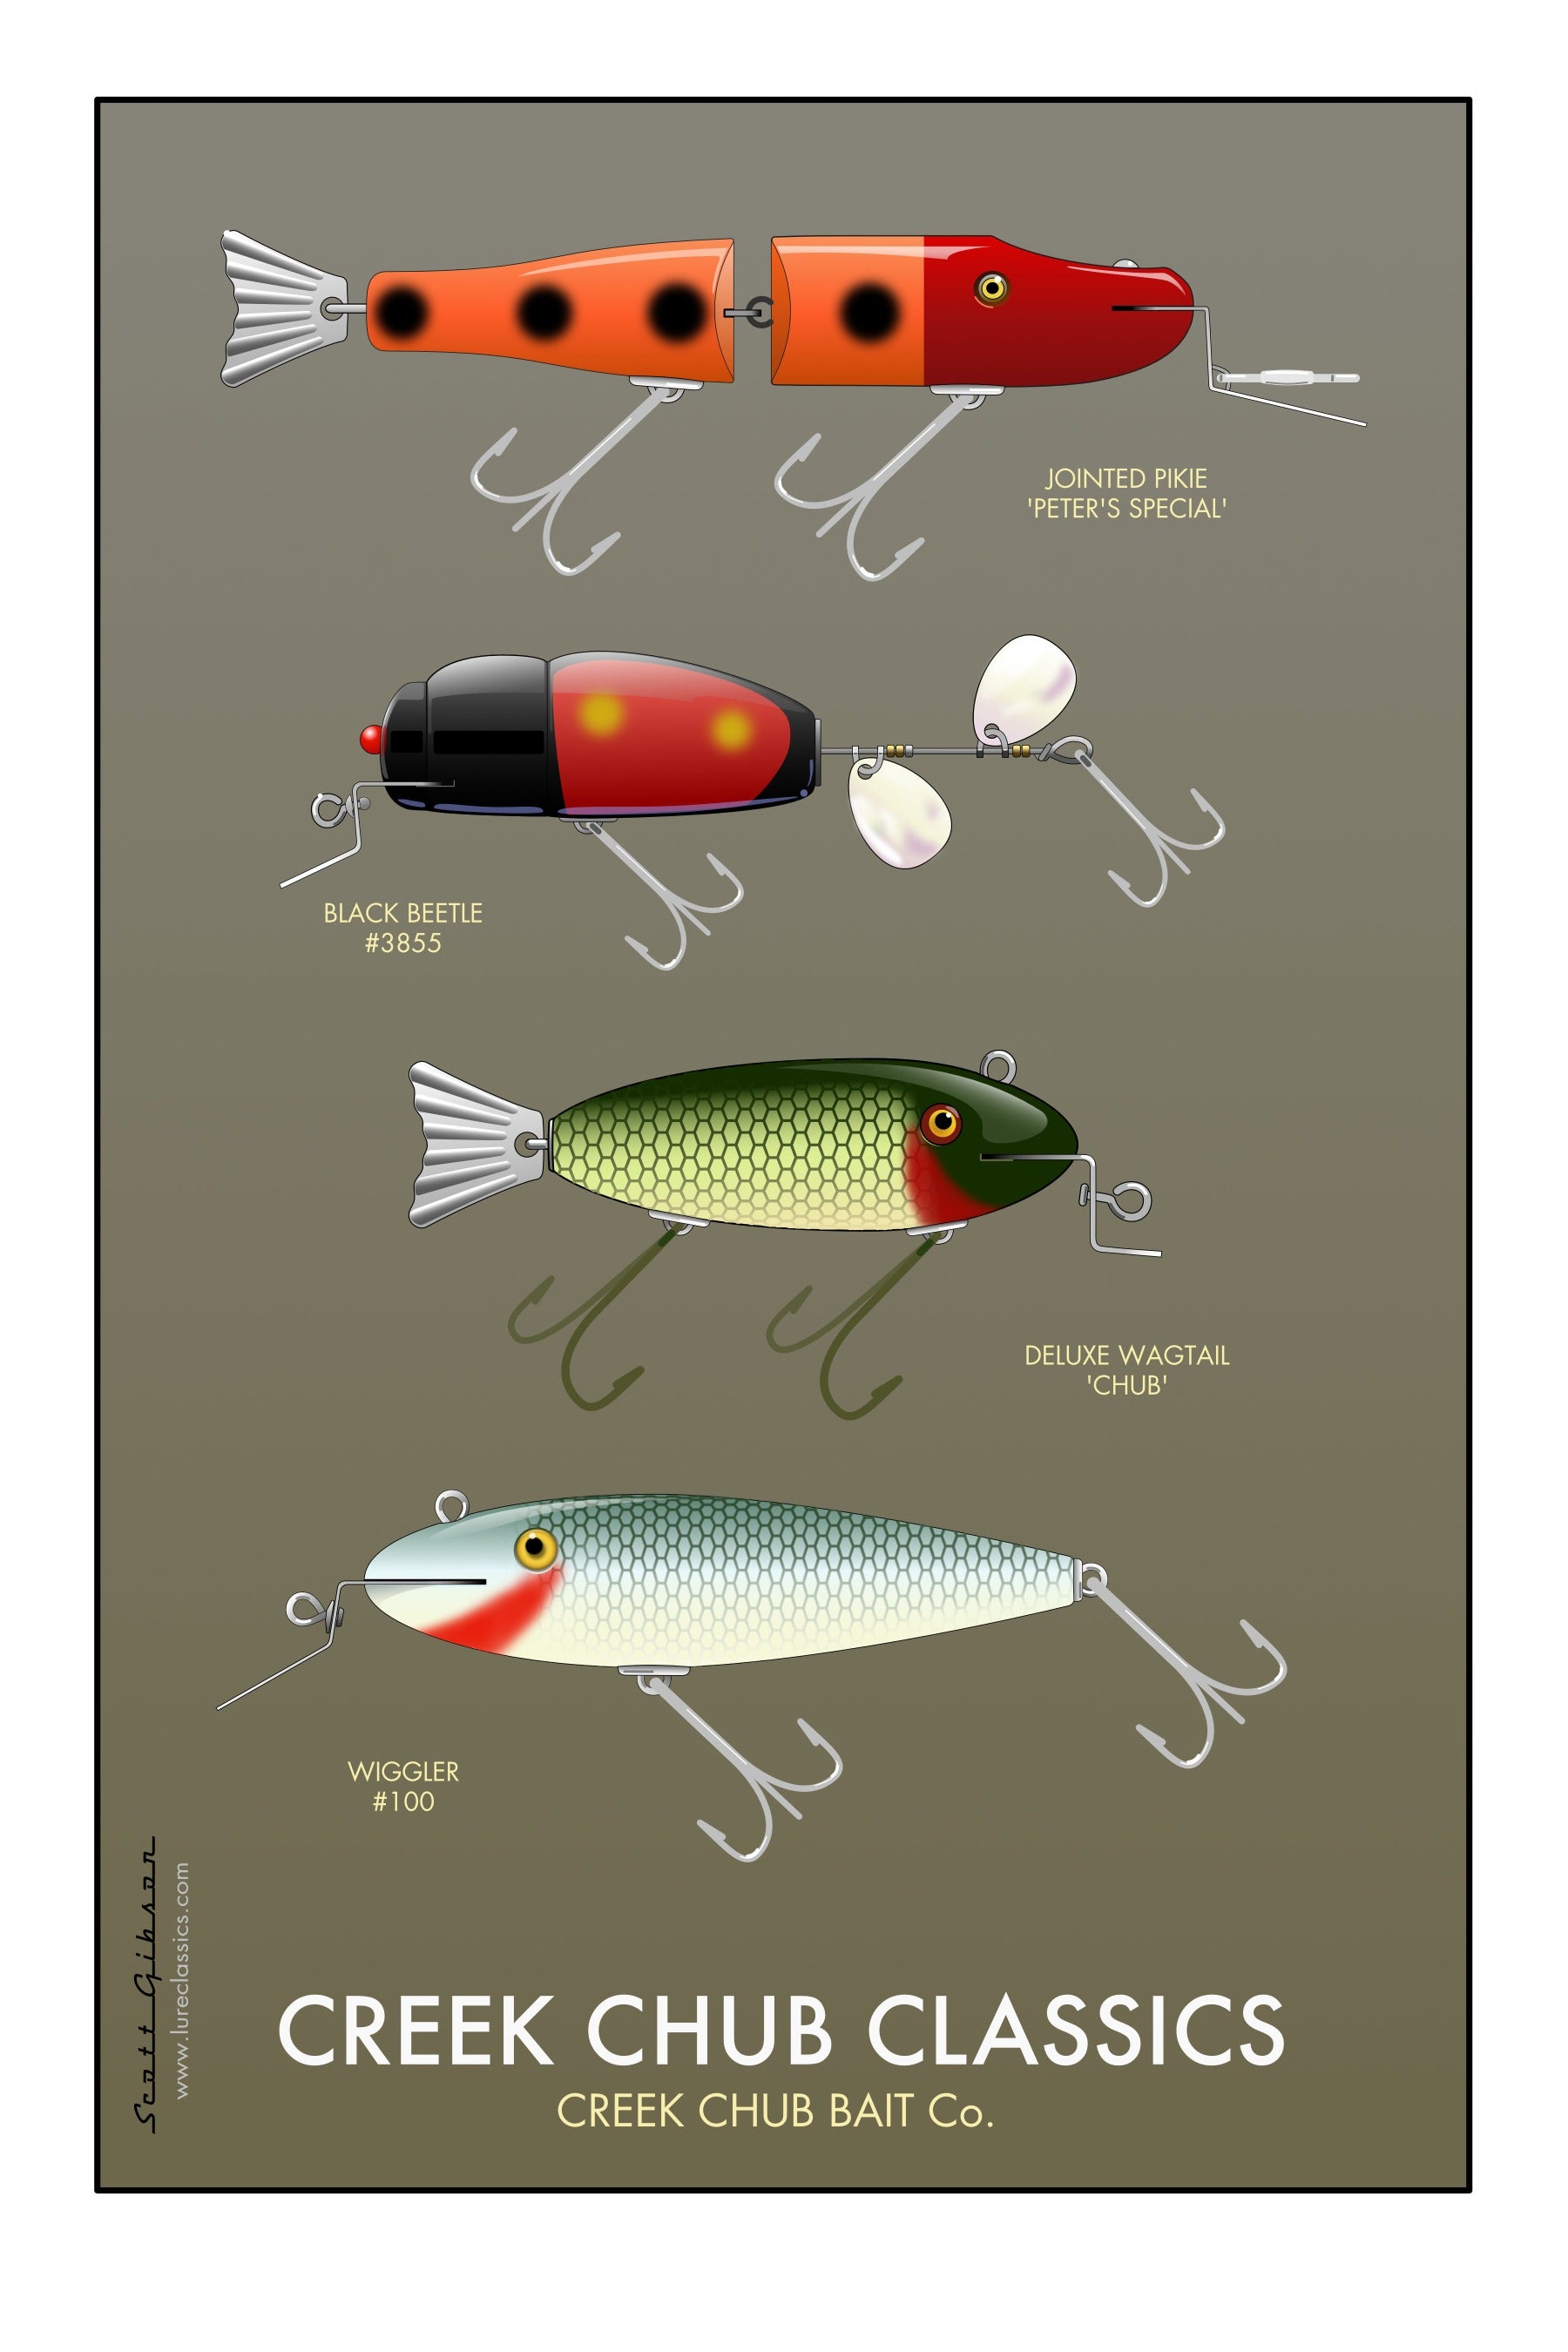 Creek Chub Classic Fishing Lures, Art, Poster